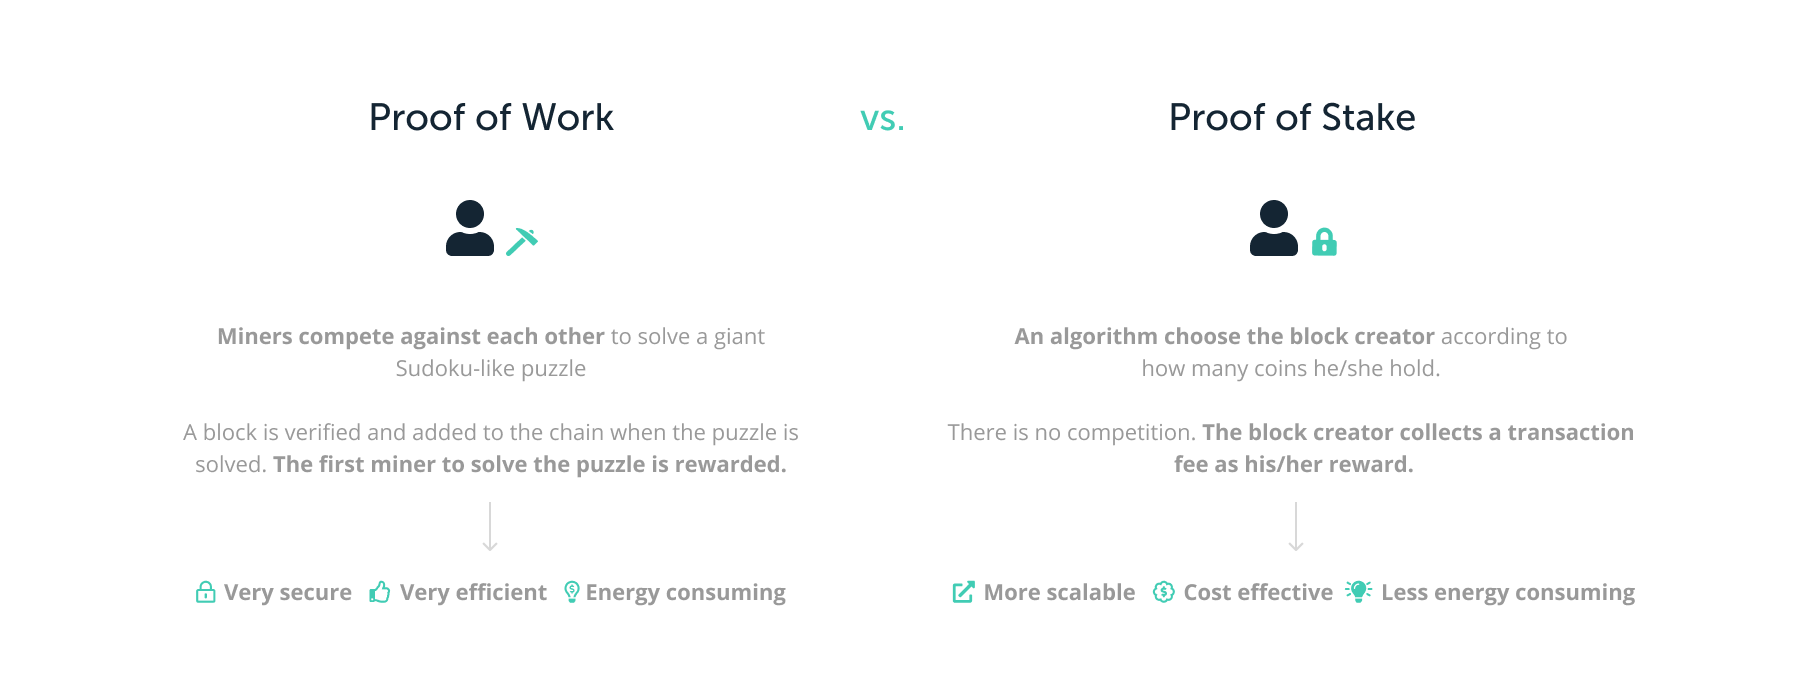 Proof-of-Work versus Proof-of-Stake